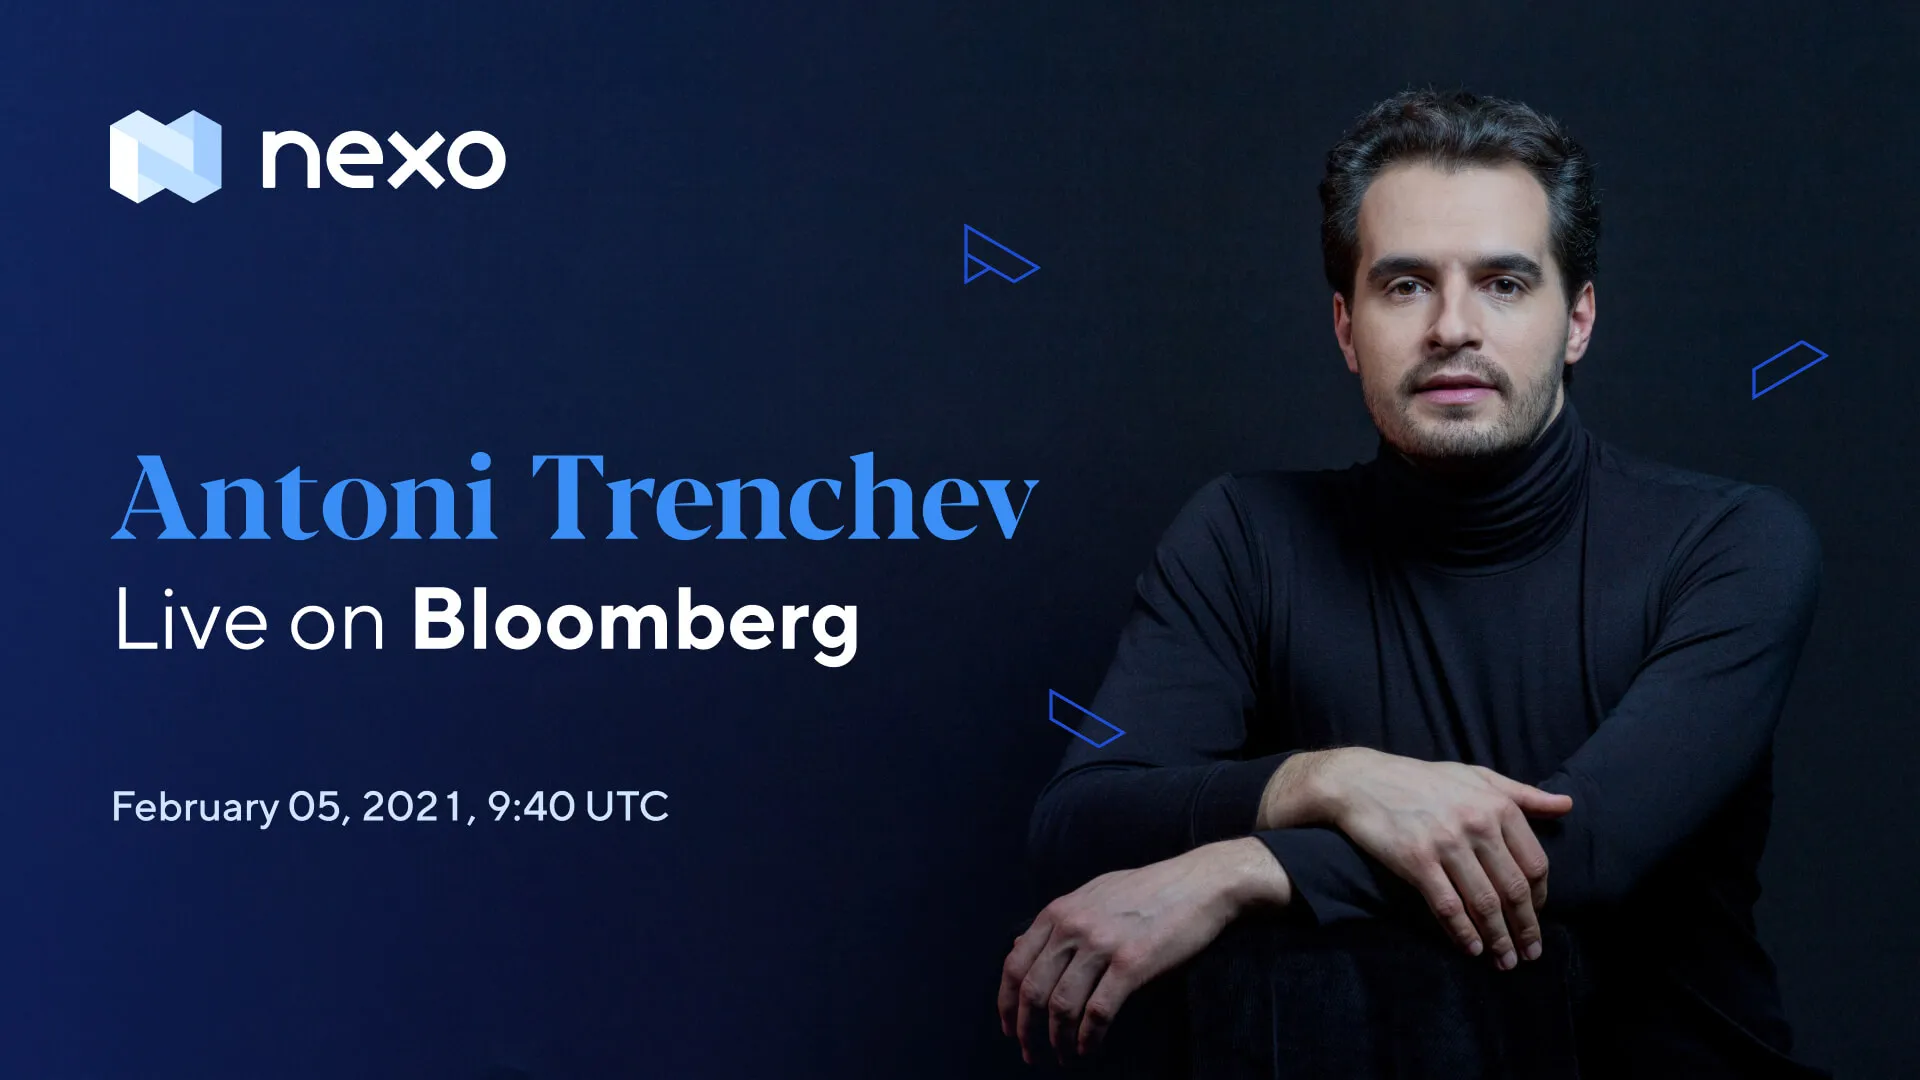 Antoni Trenchev live on Bloomberg Nexo visual.